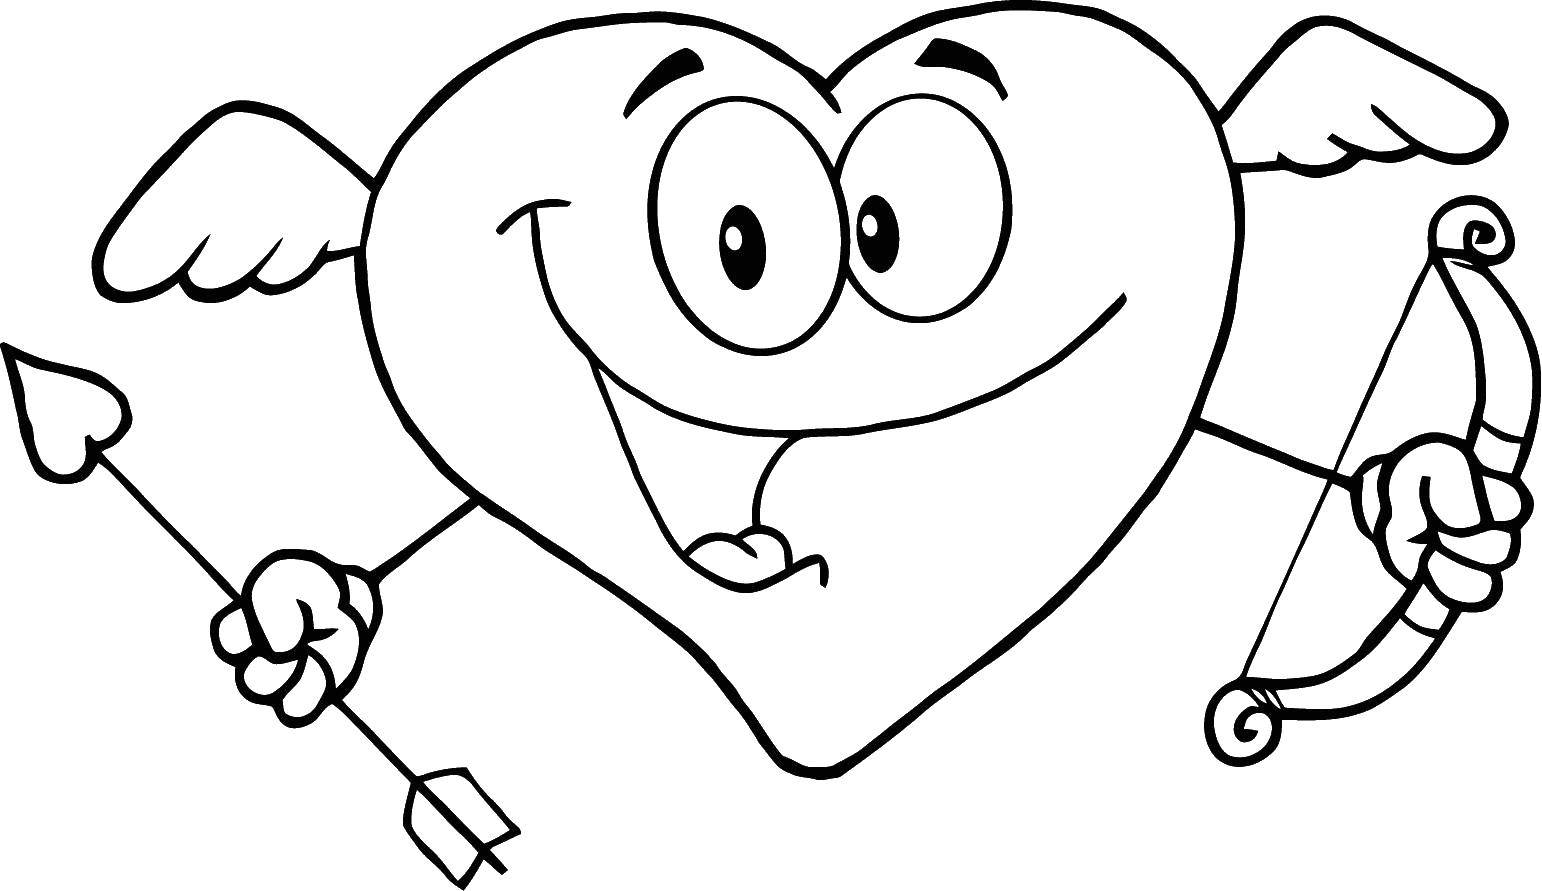 Название: Раскраска Сердце купидон. Категория: Я тебя люблю. Теги: сердечки, любовь, стрелы.